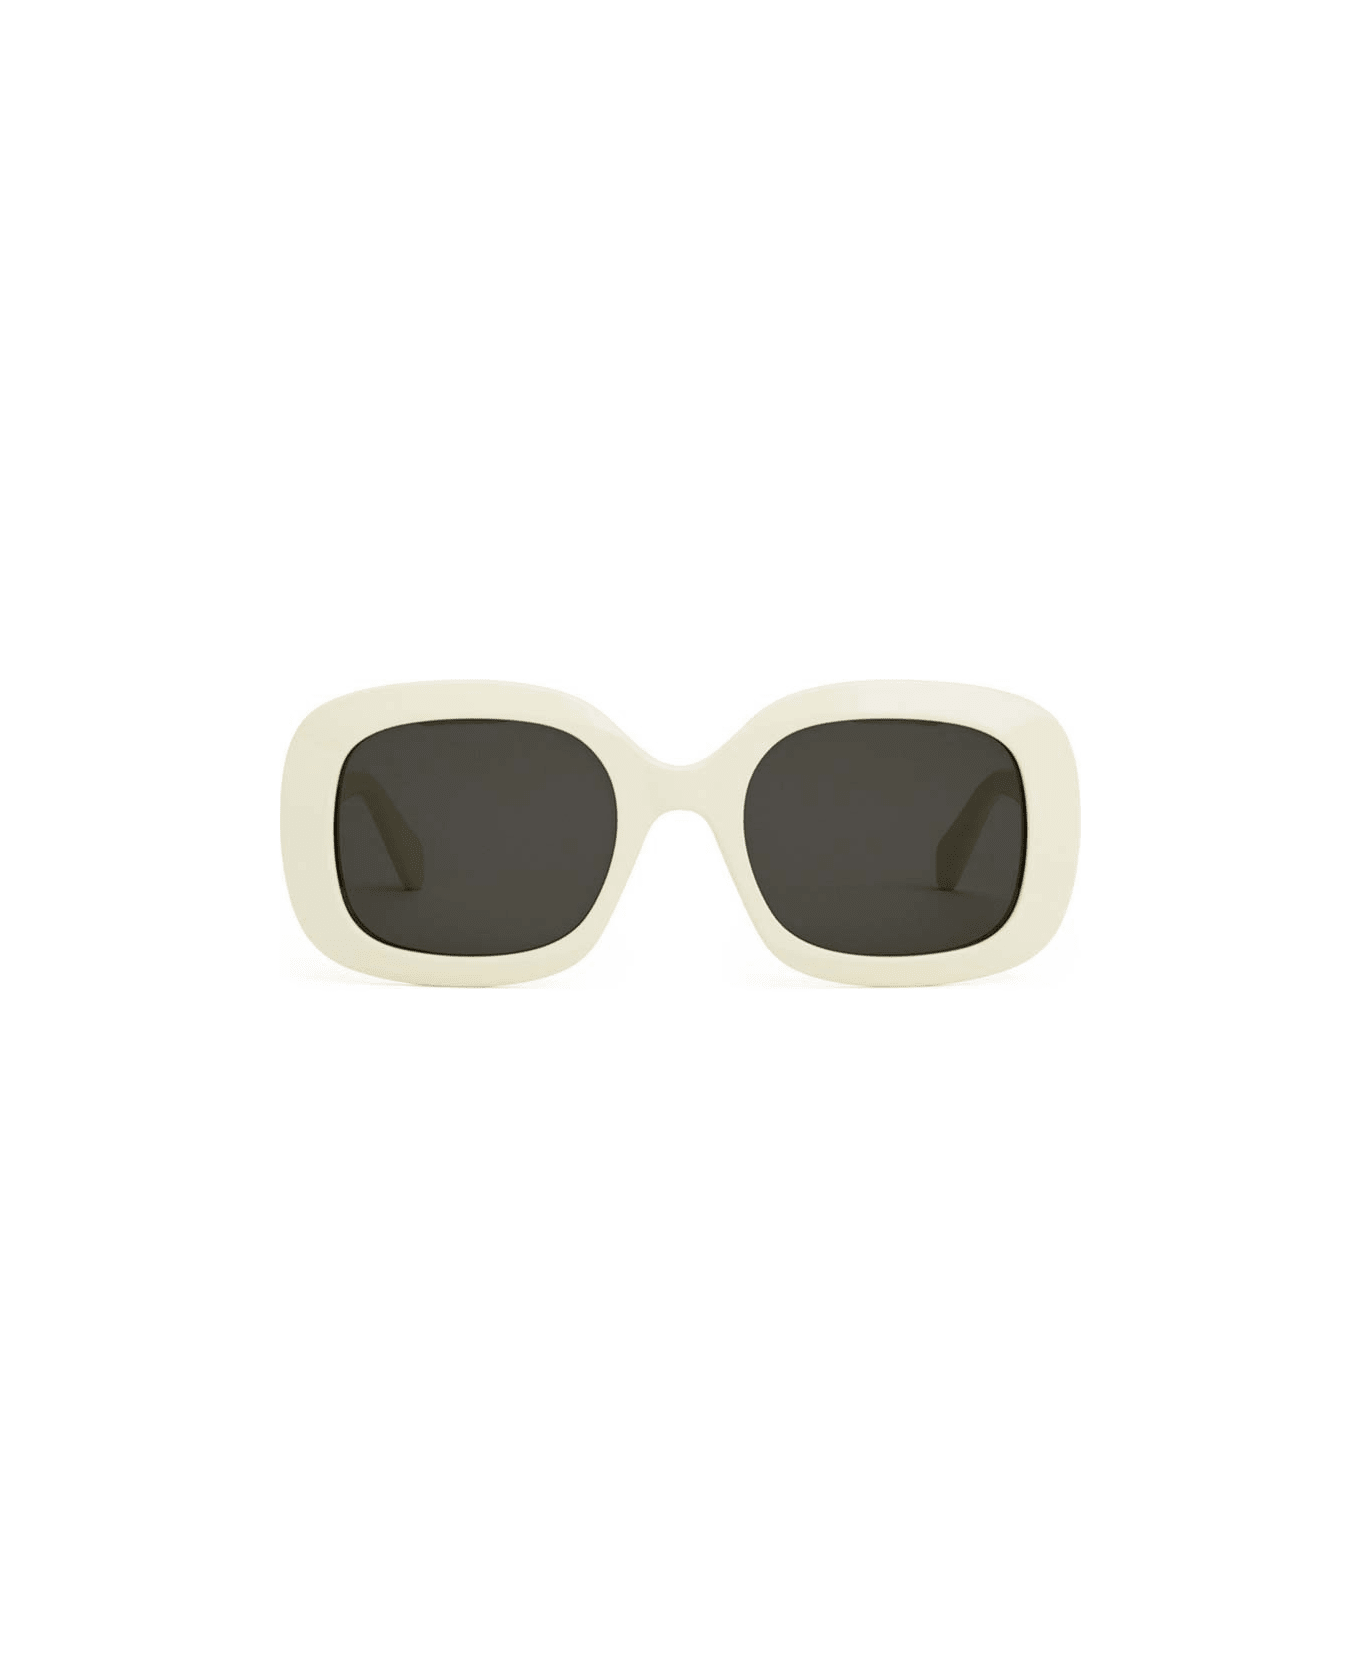 Celine Sunglasses - Avorio/Grigio サングラス